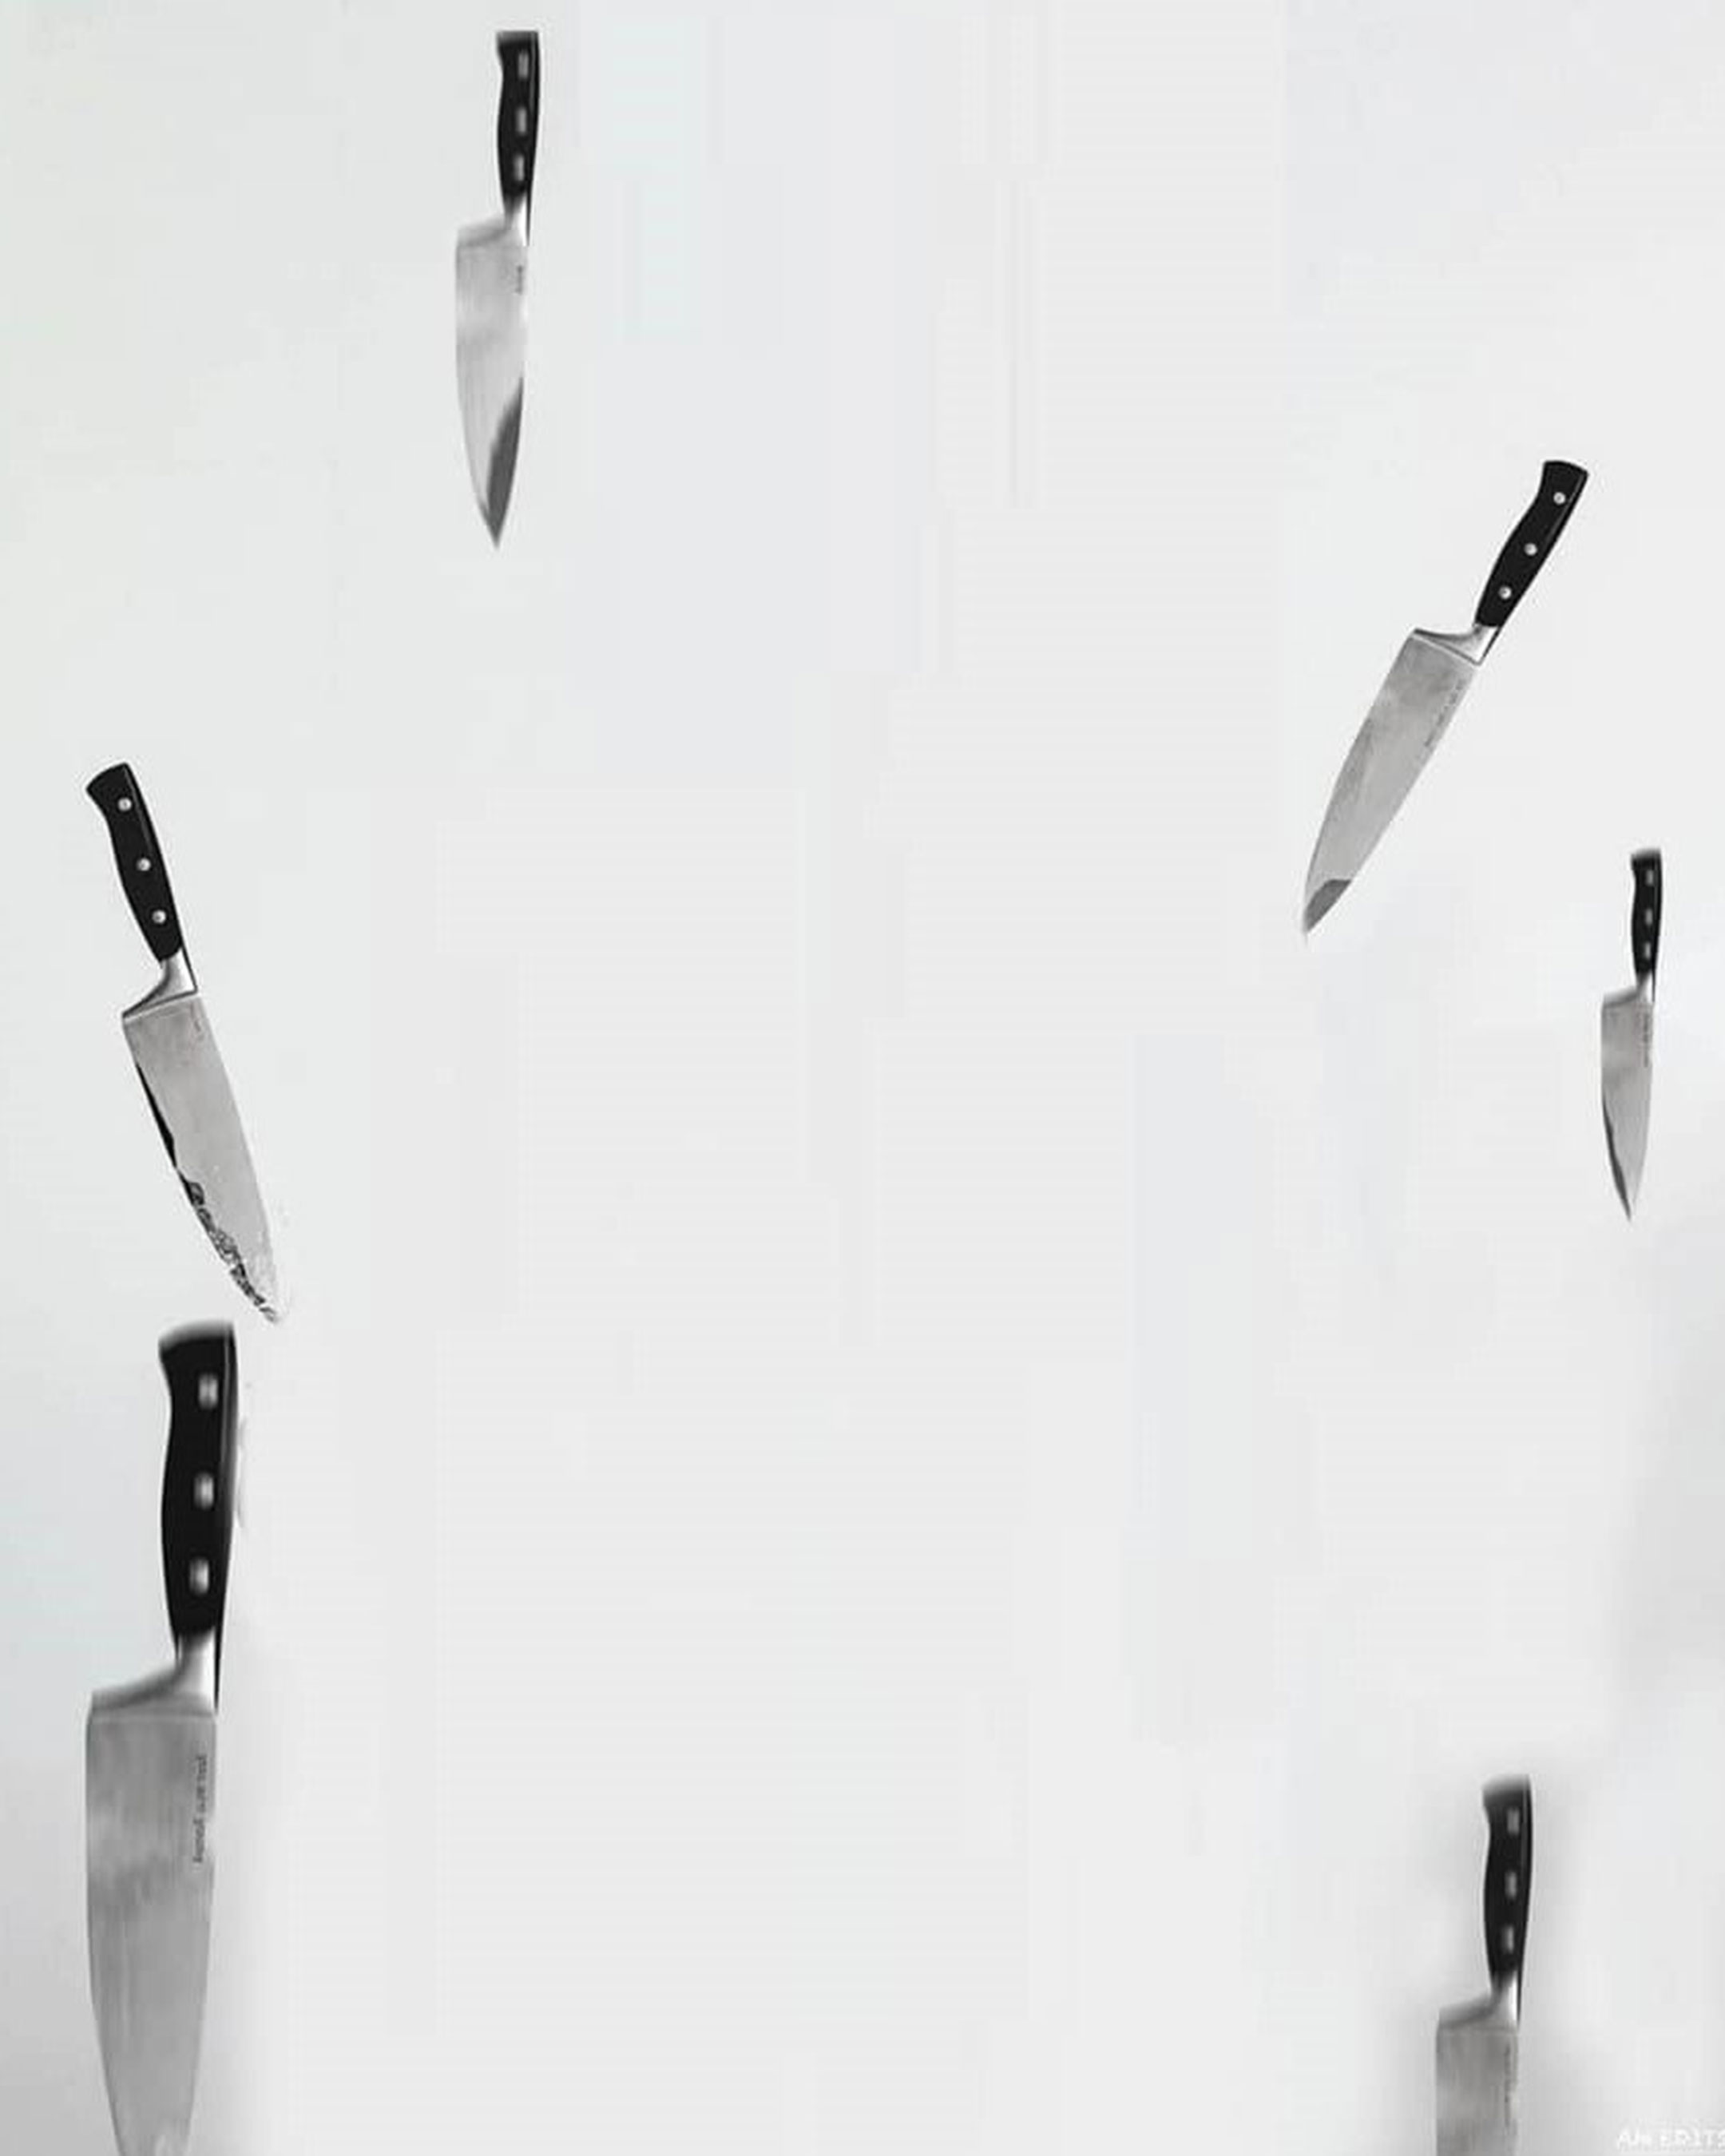 Multiple Knife Falling Photo Editing Background Full HD Image